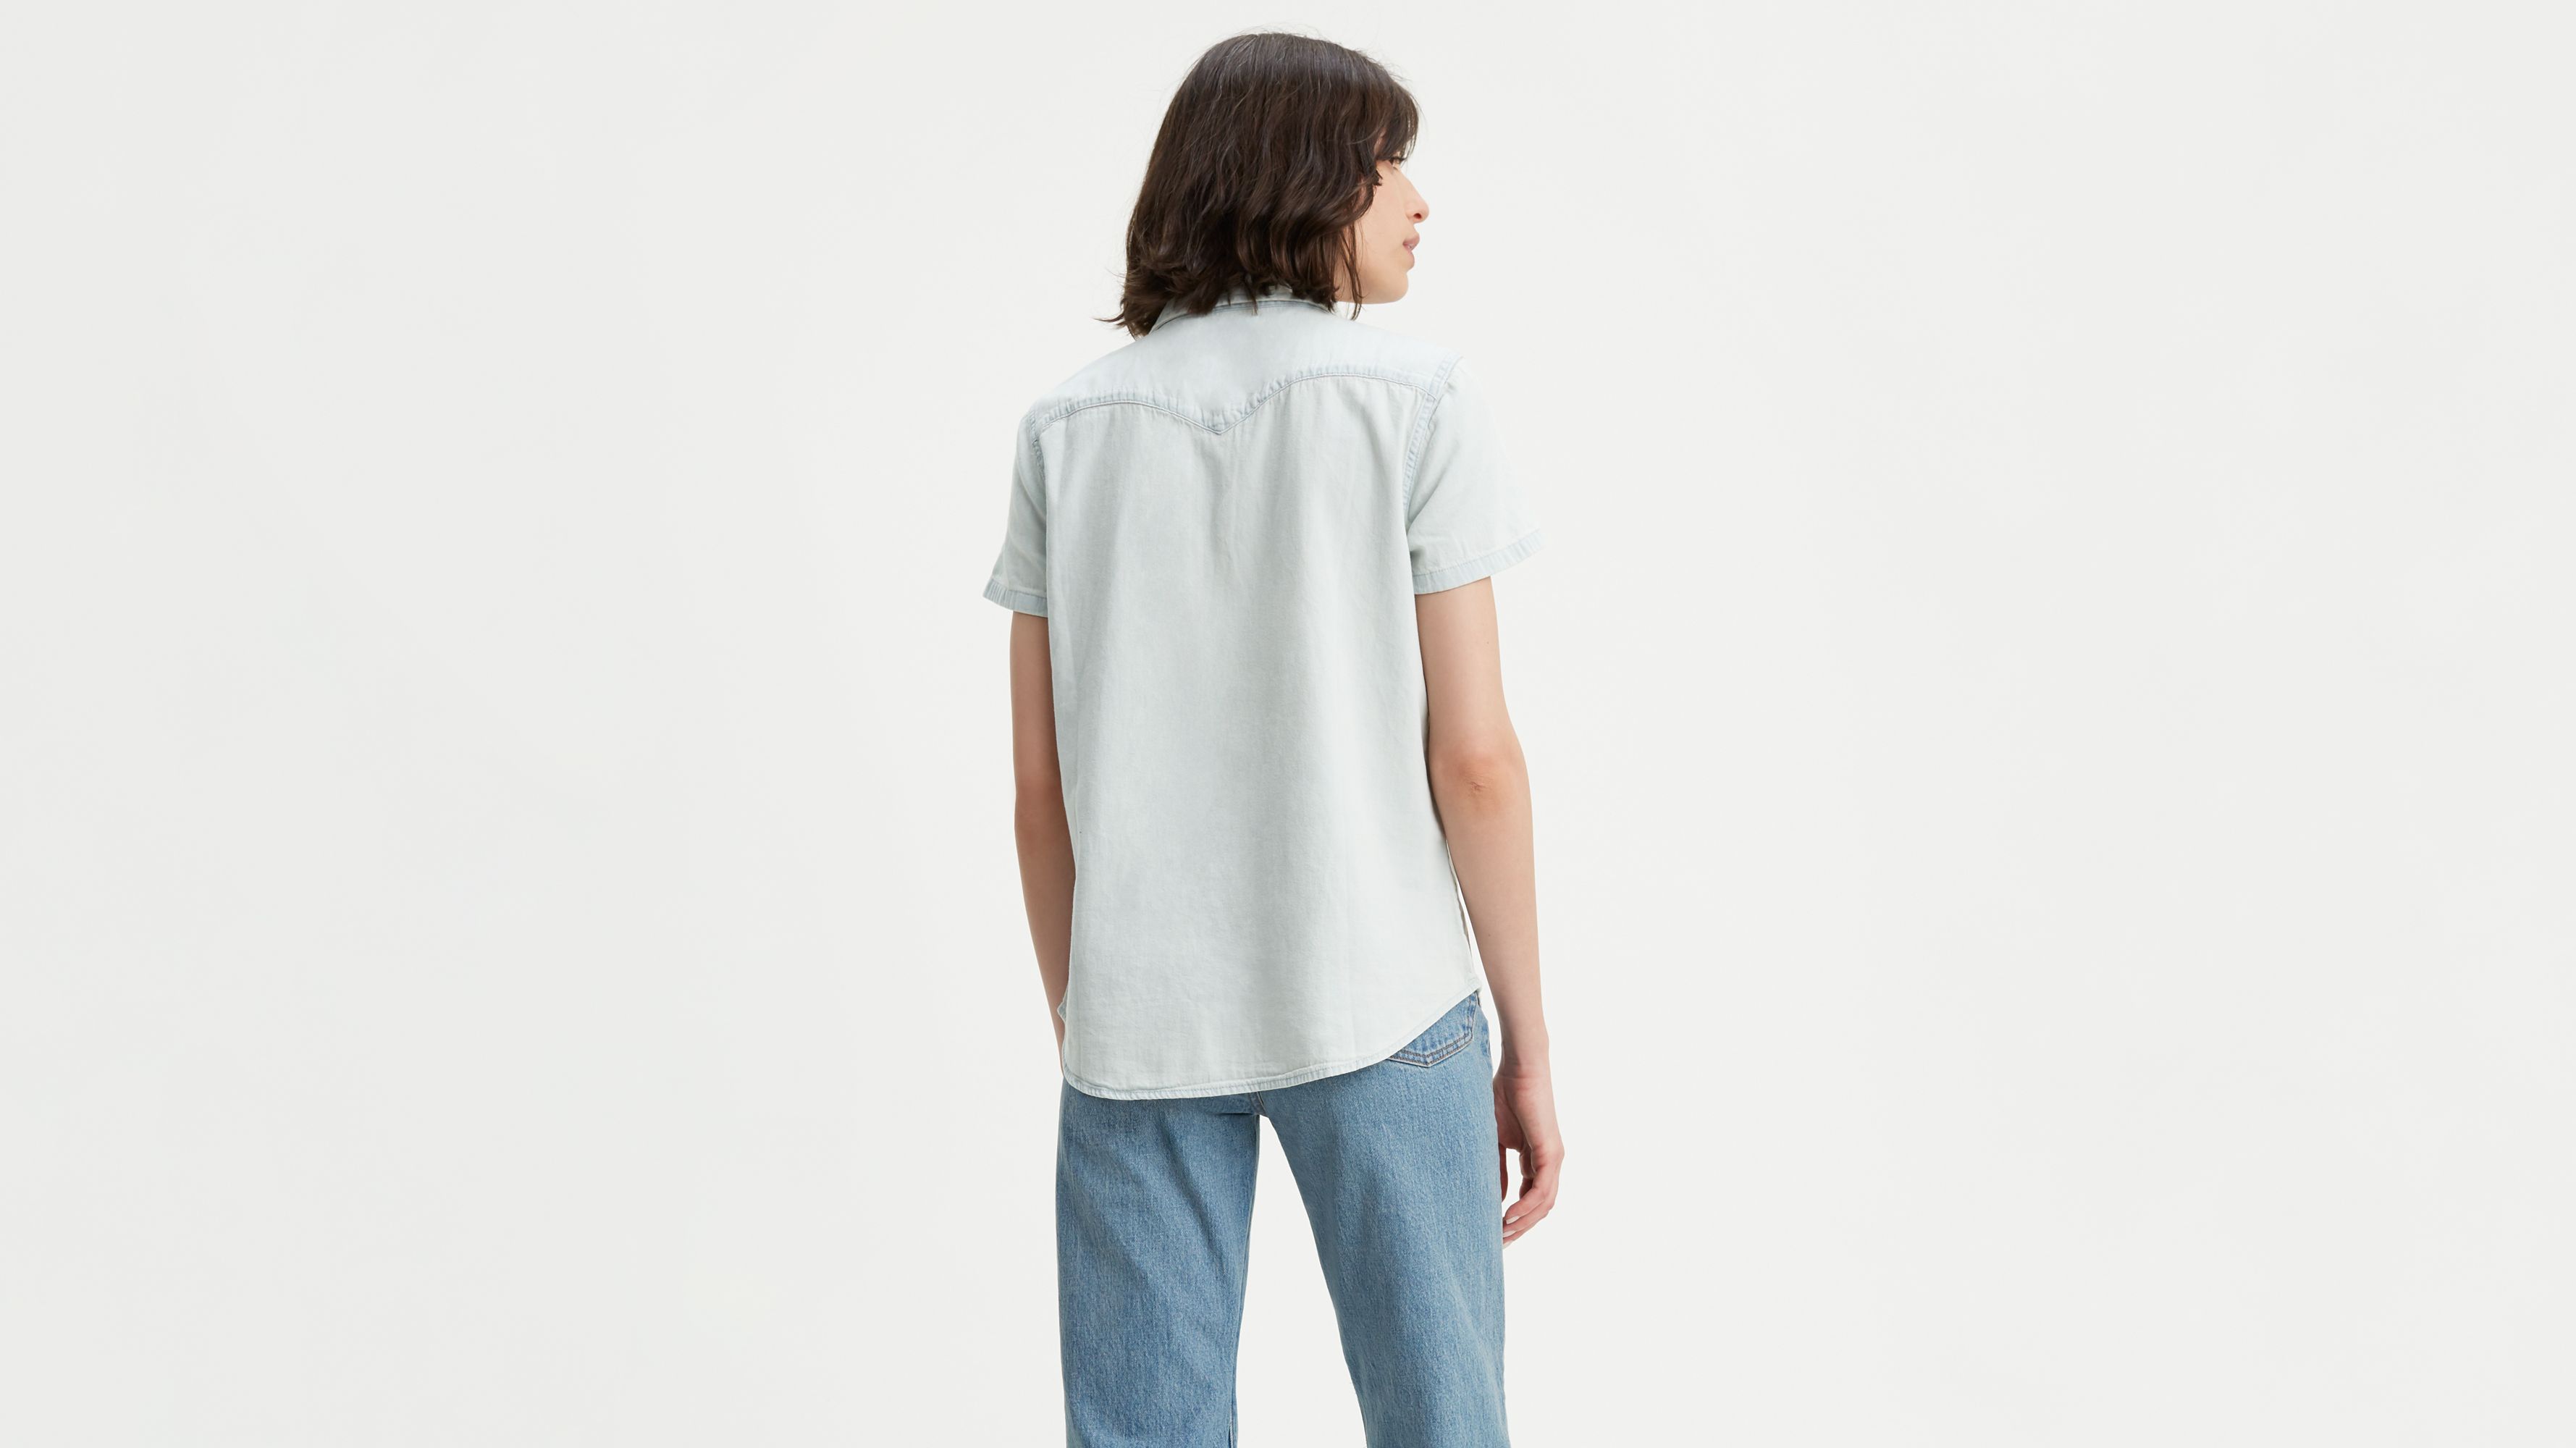 M Vetements Levis Oversized two Pocket denim shirt jacket | eBay